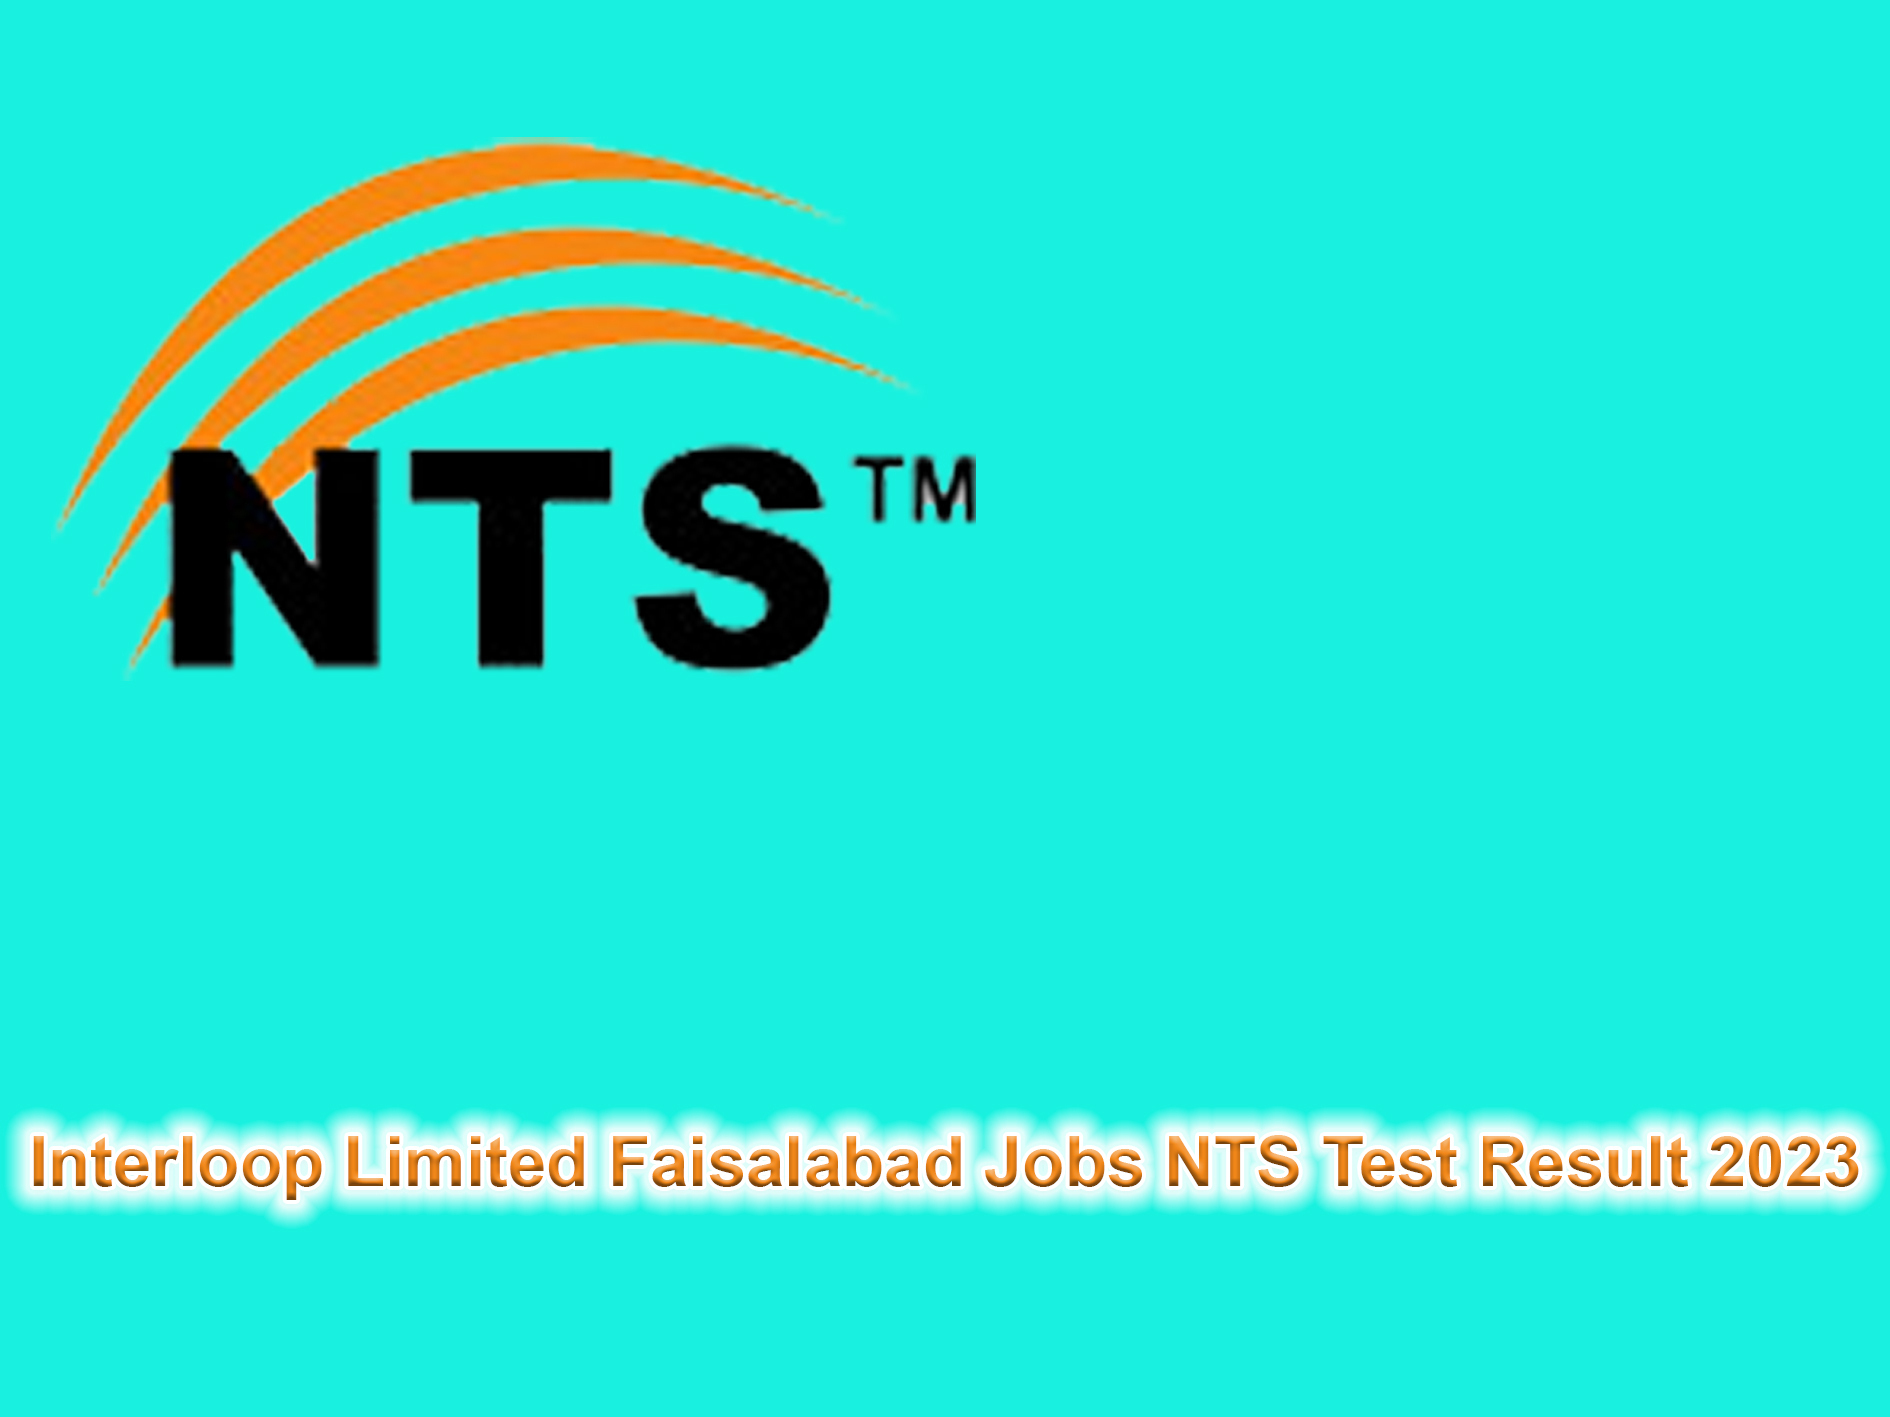 Interloop Limited Faisalabad Jobs NTS Test Result 2023